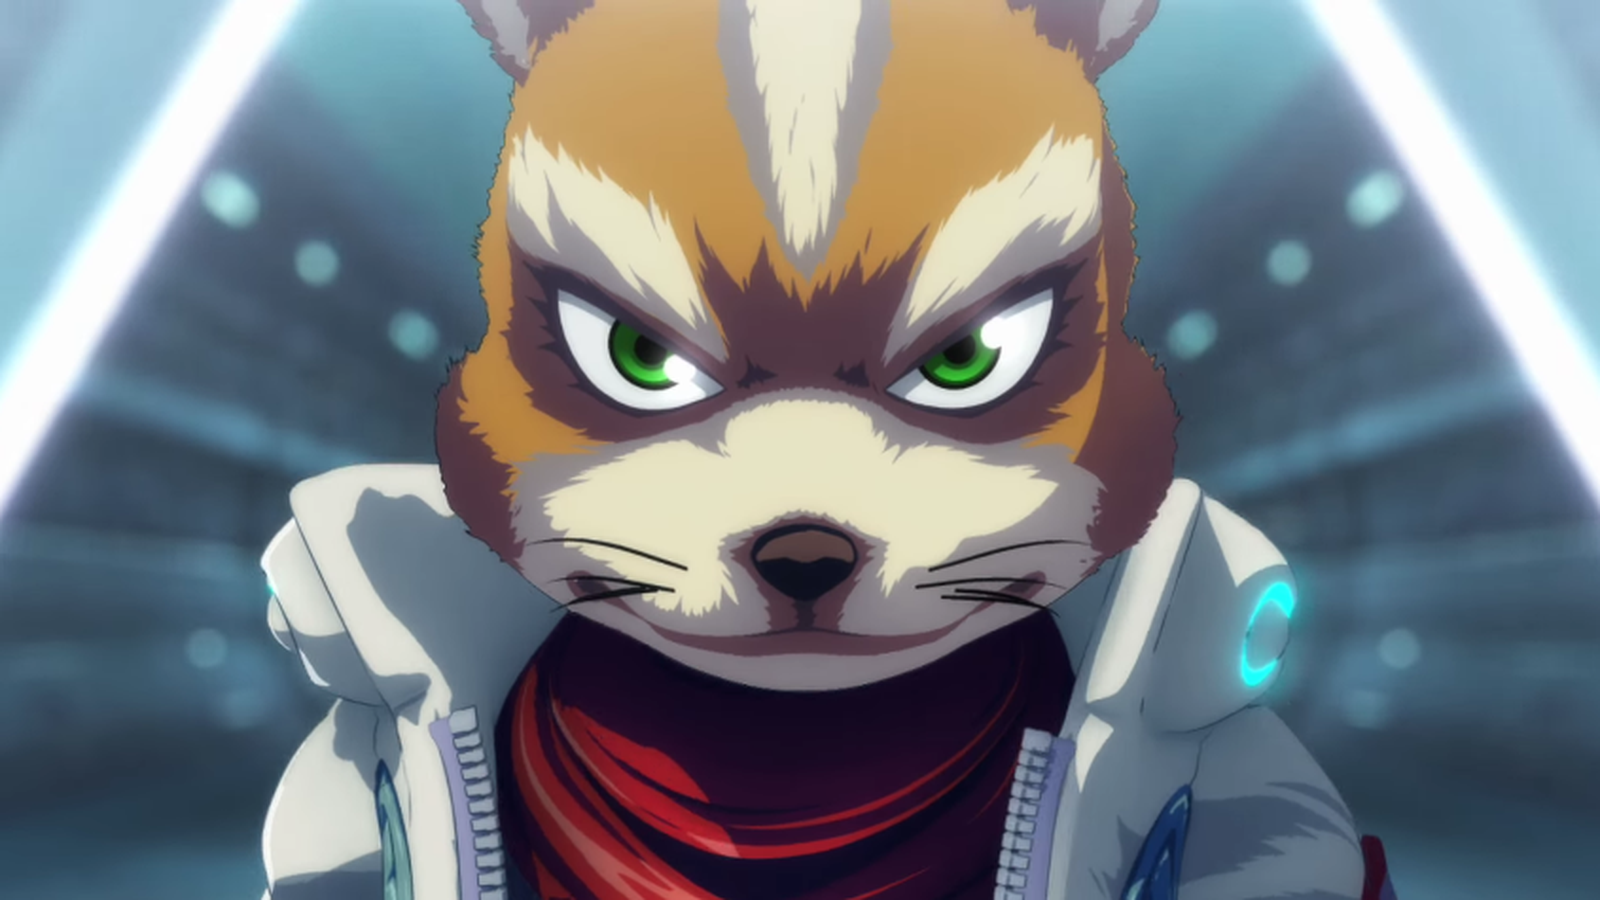 Starfox-anime - 0 - 0 - Star Fox Zero The Battle Begins - HD Wallpaper 